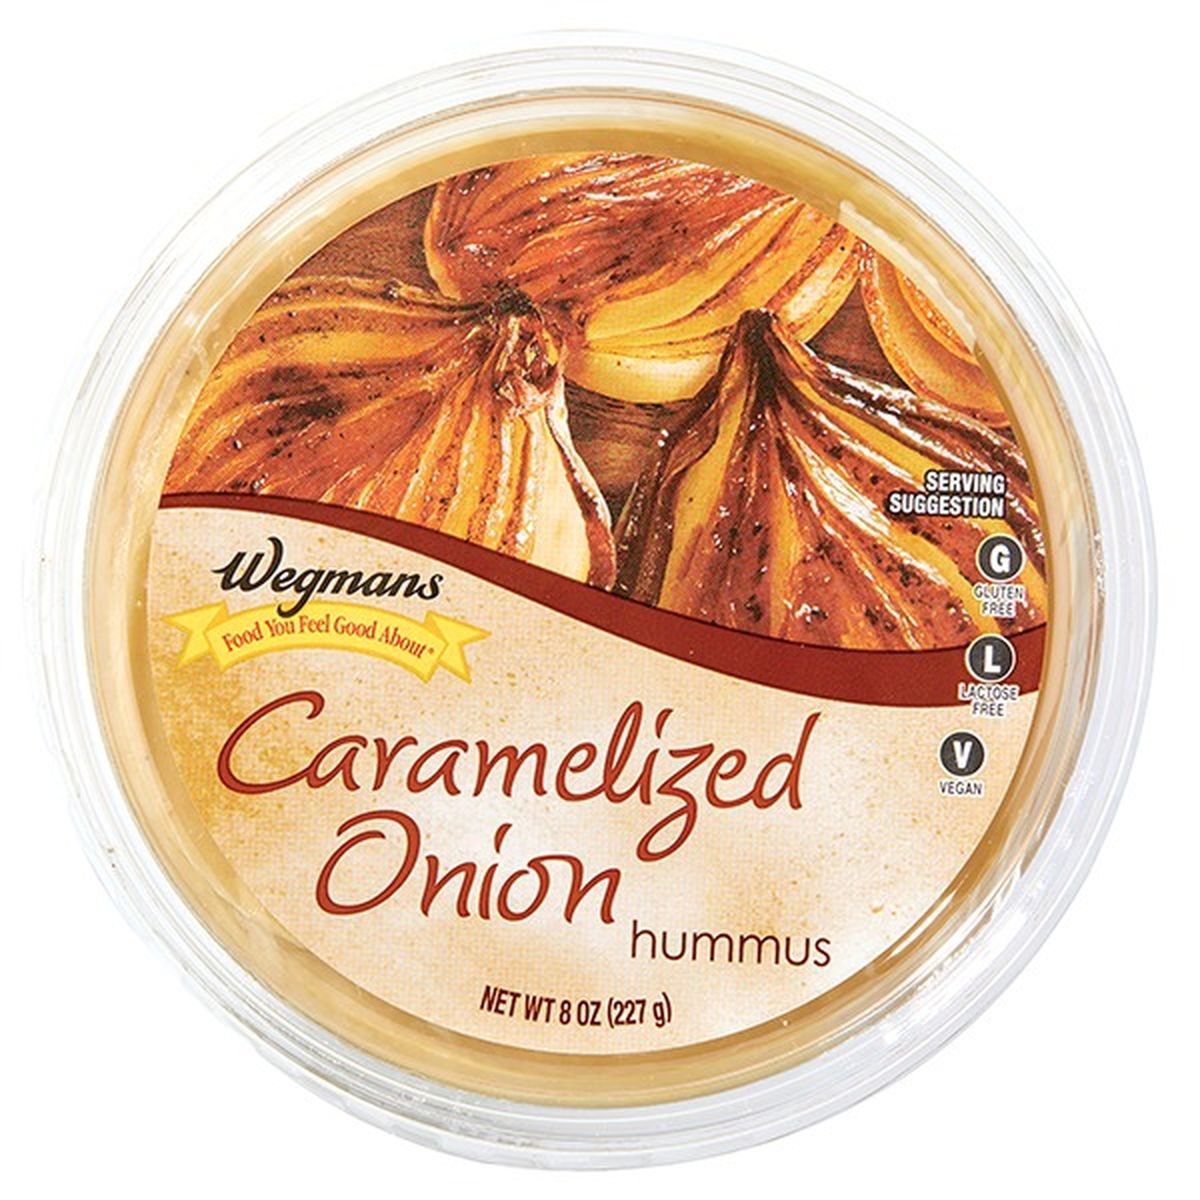 Calories in Wegmans Caramelized Onion Hummus